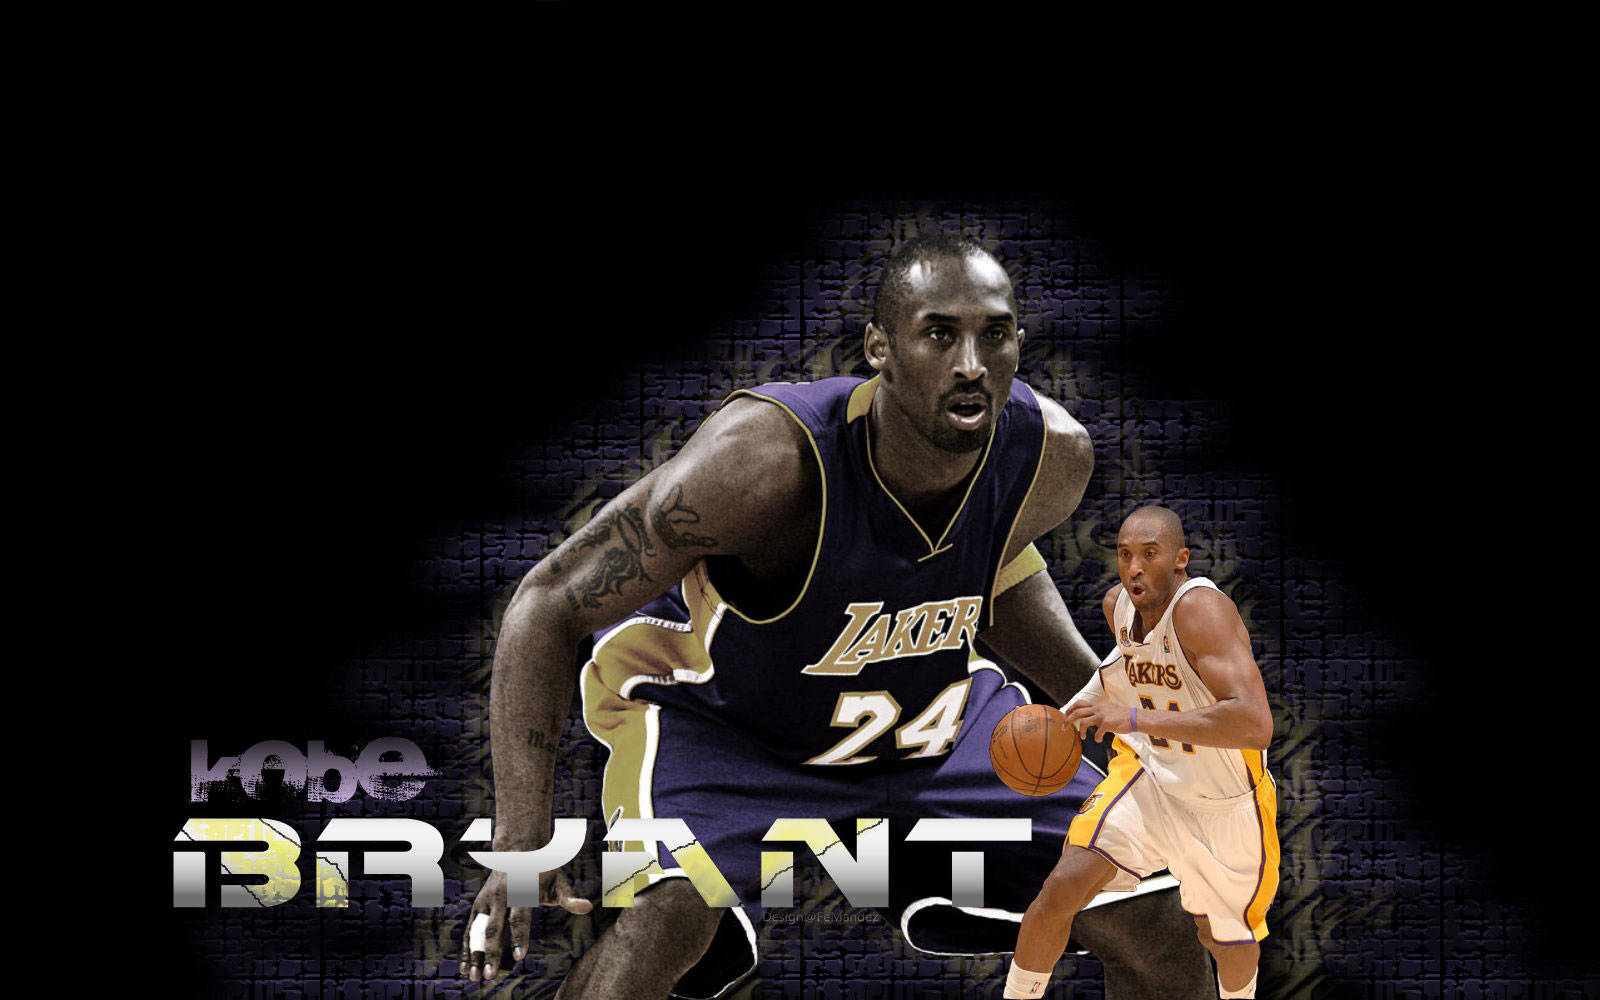 Kobe Bryant Defense Widescreen Wallpaper | Basketball Wallpapers at BasketWallpapers.com1600 x 1000